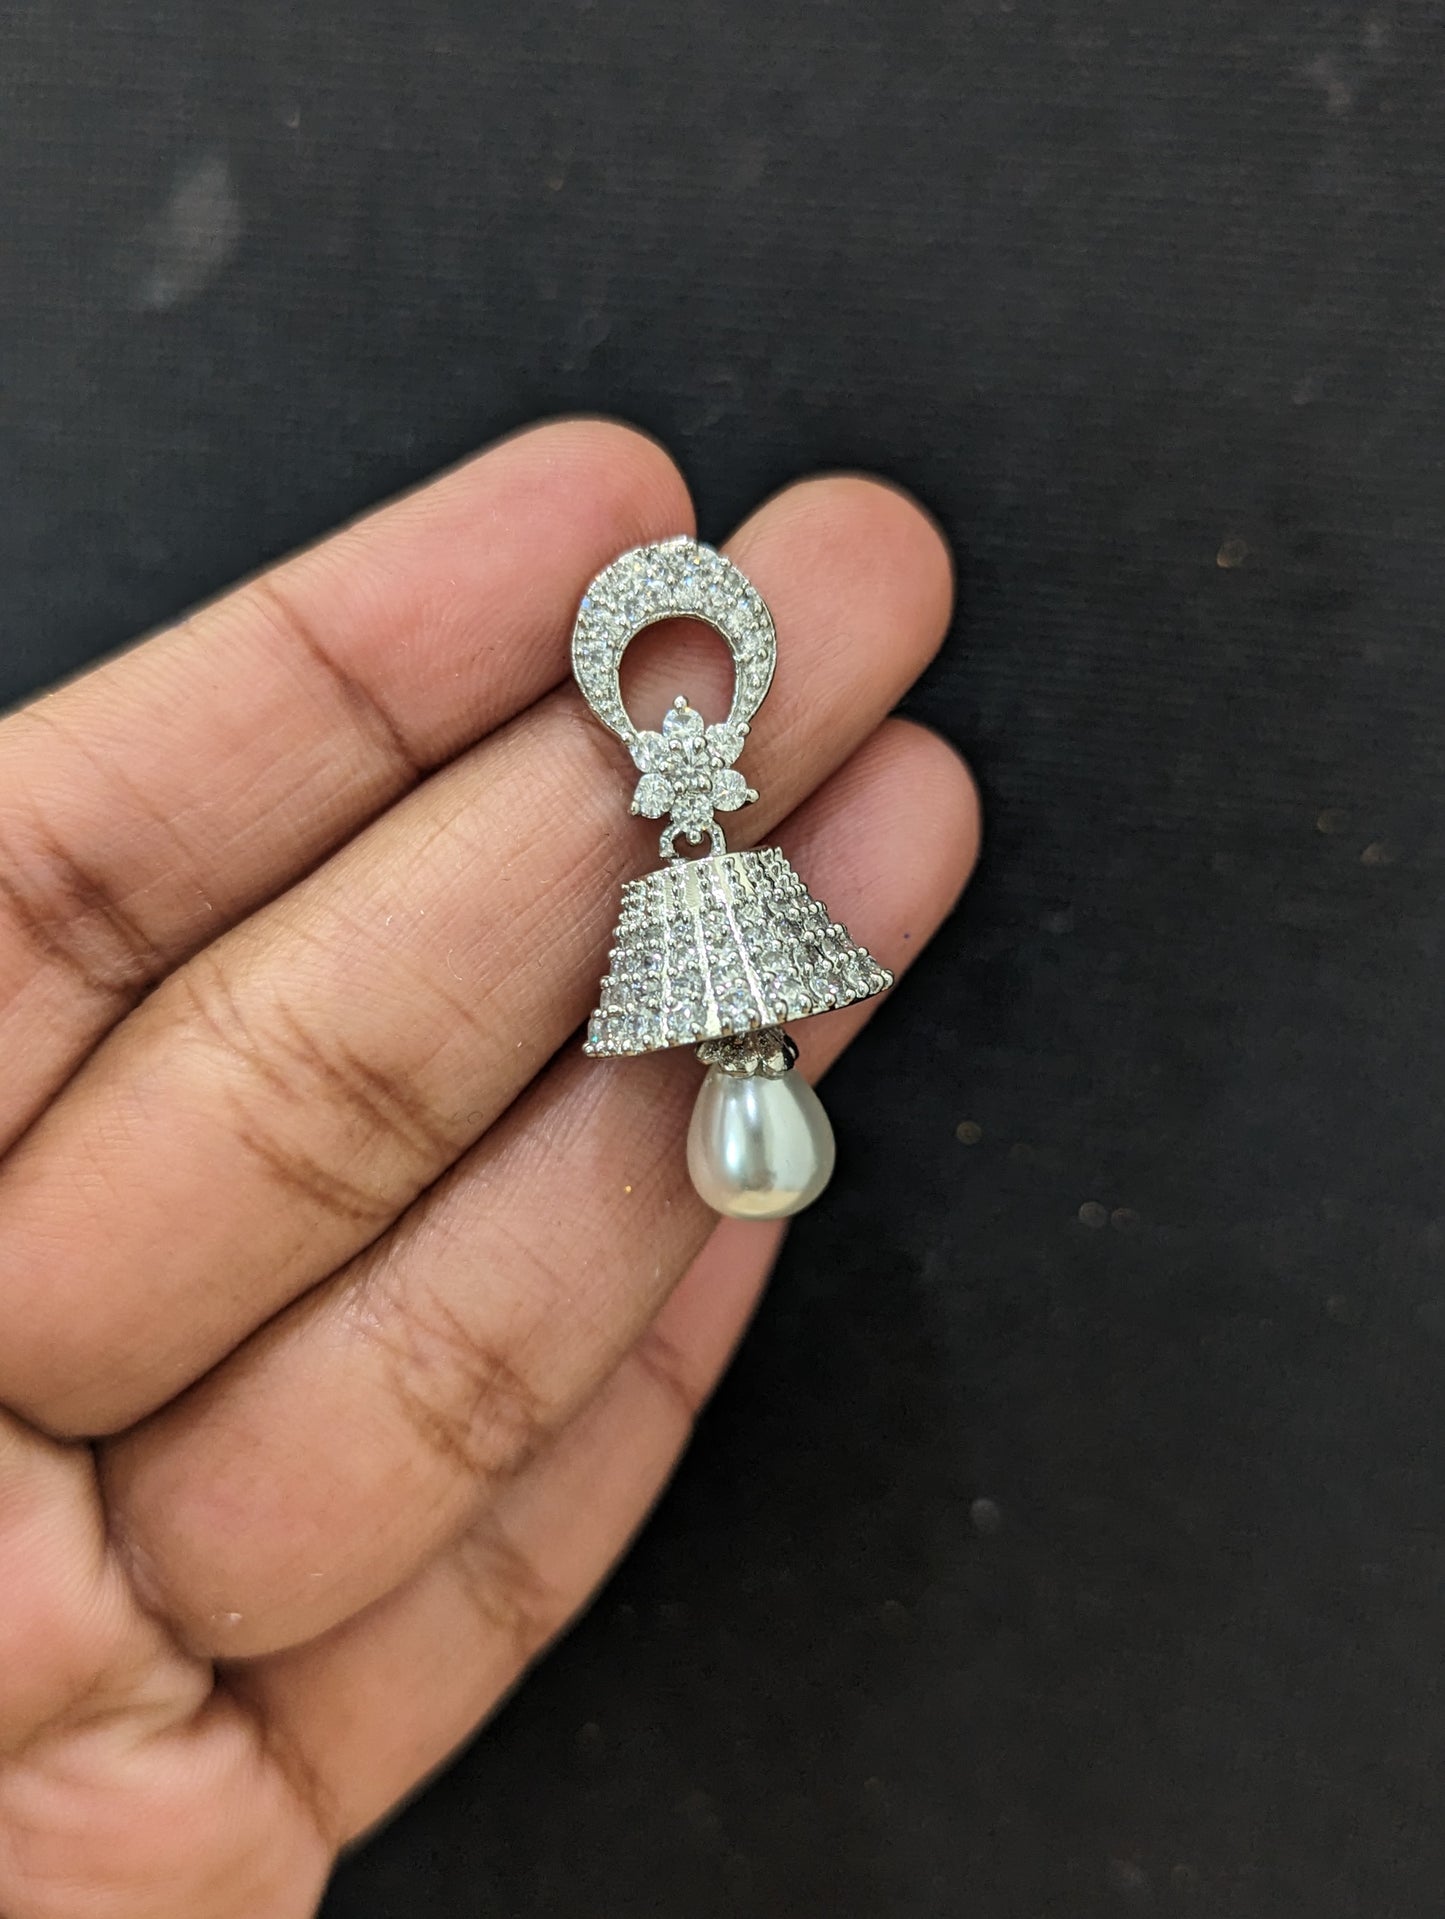 Small CZ Jhumka earrings - Design 17